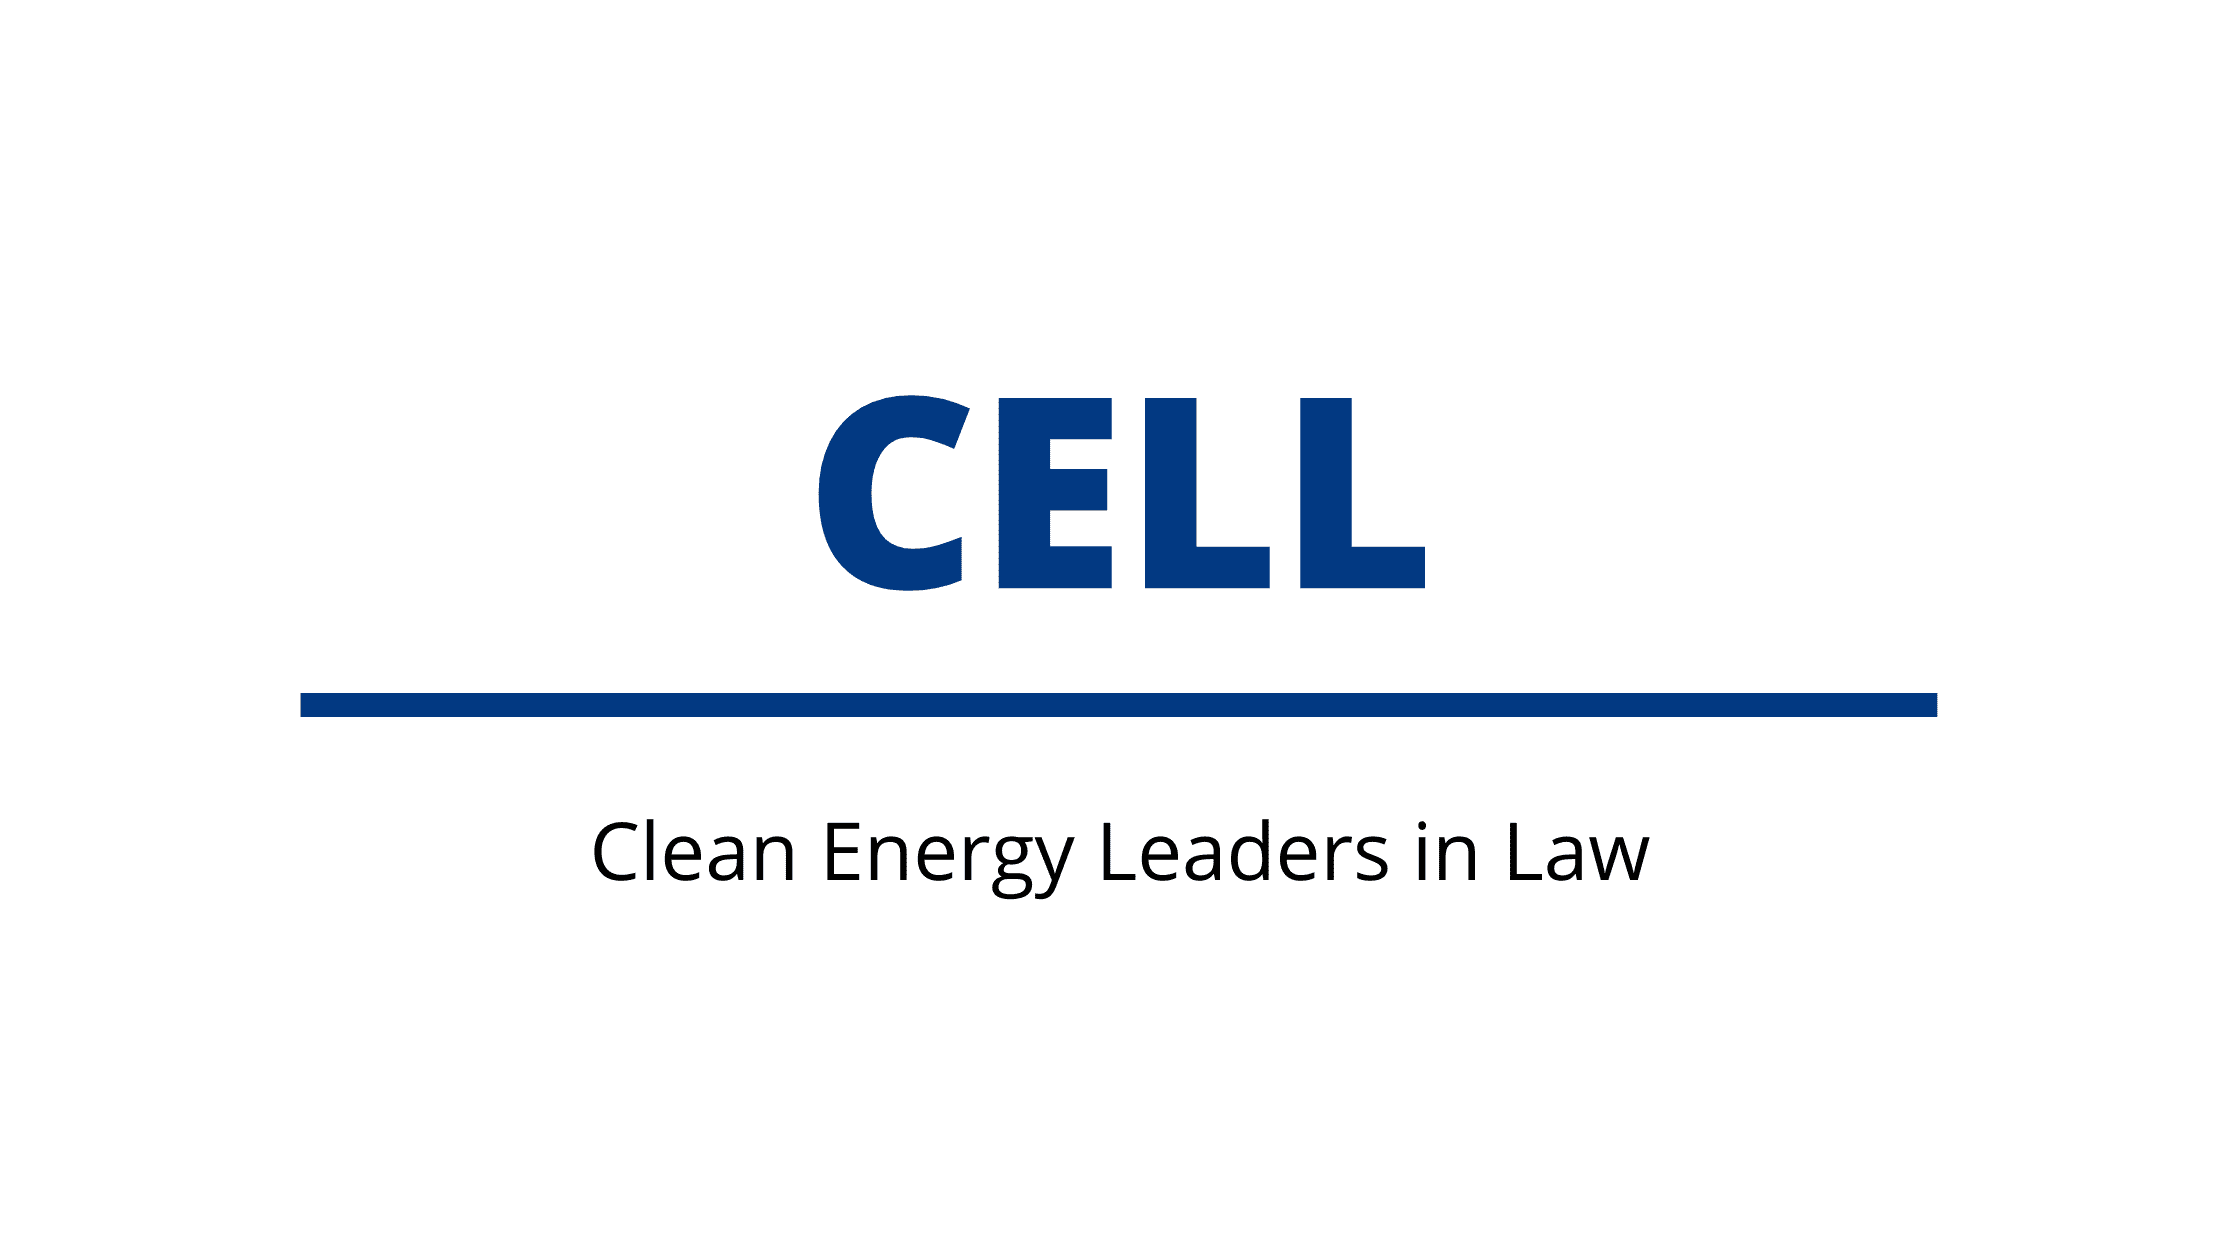 CELL (Clean Energy Leaders in Law) SLP logo